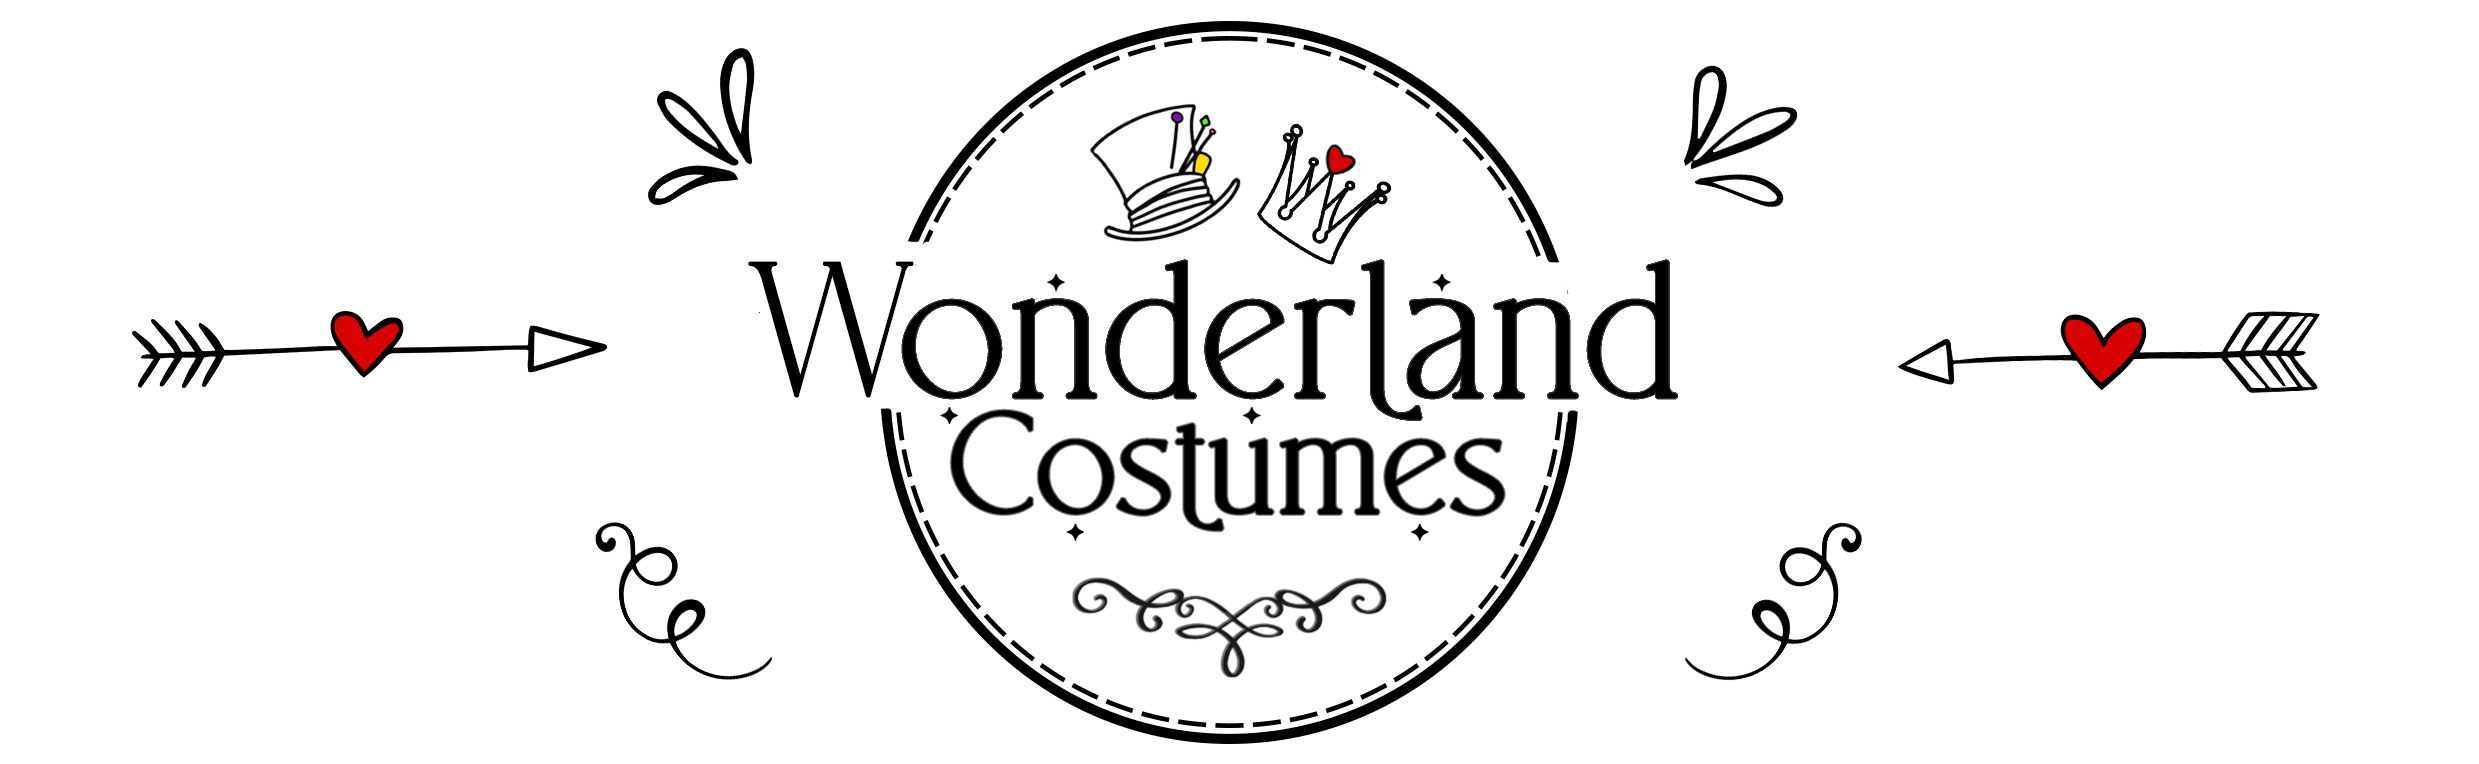 Wonderland Costumes